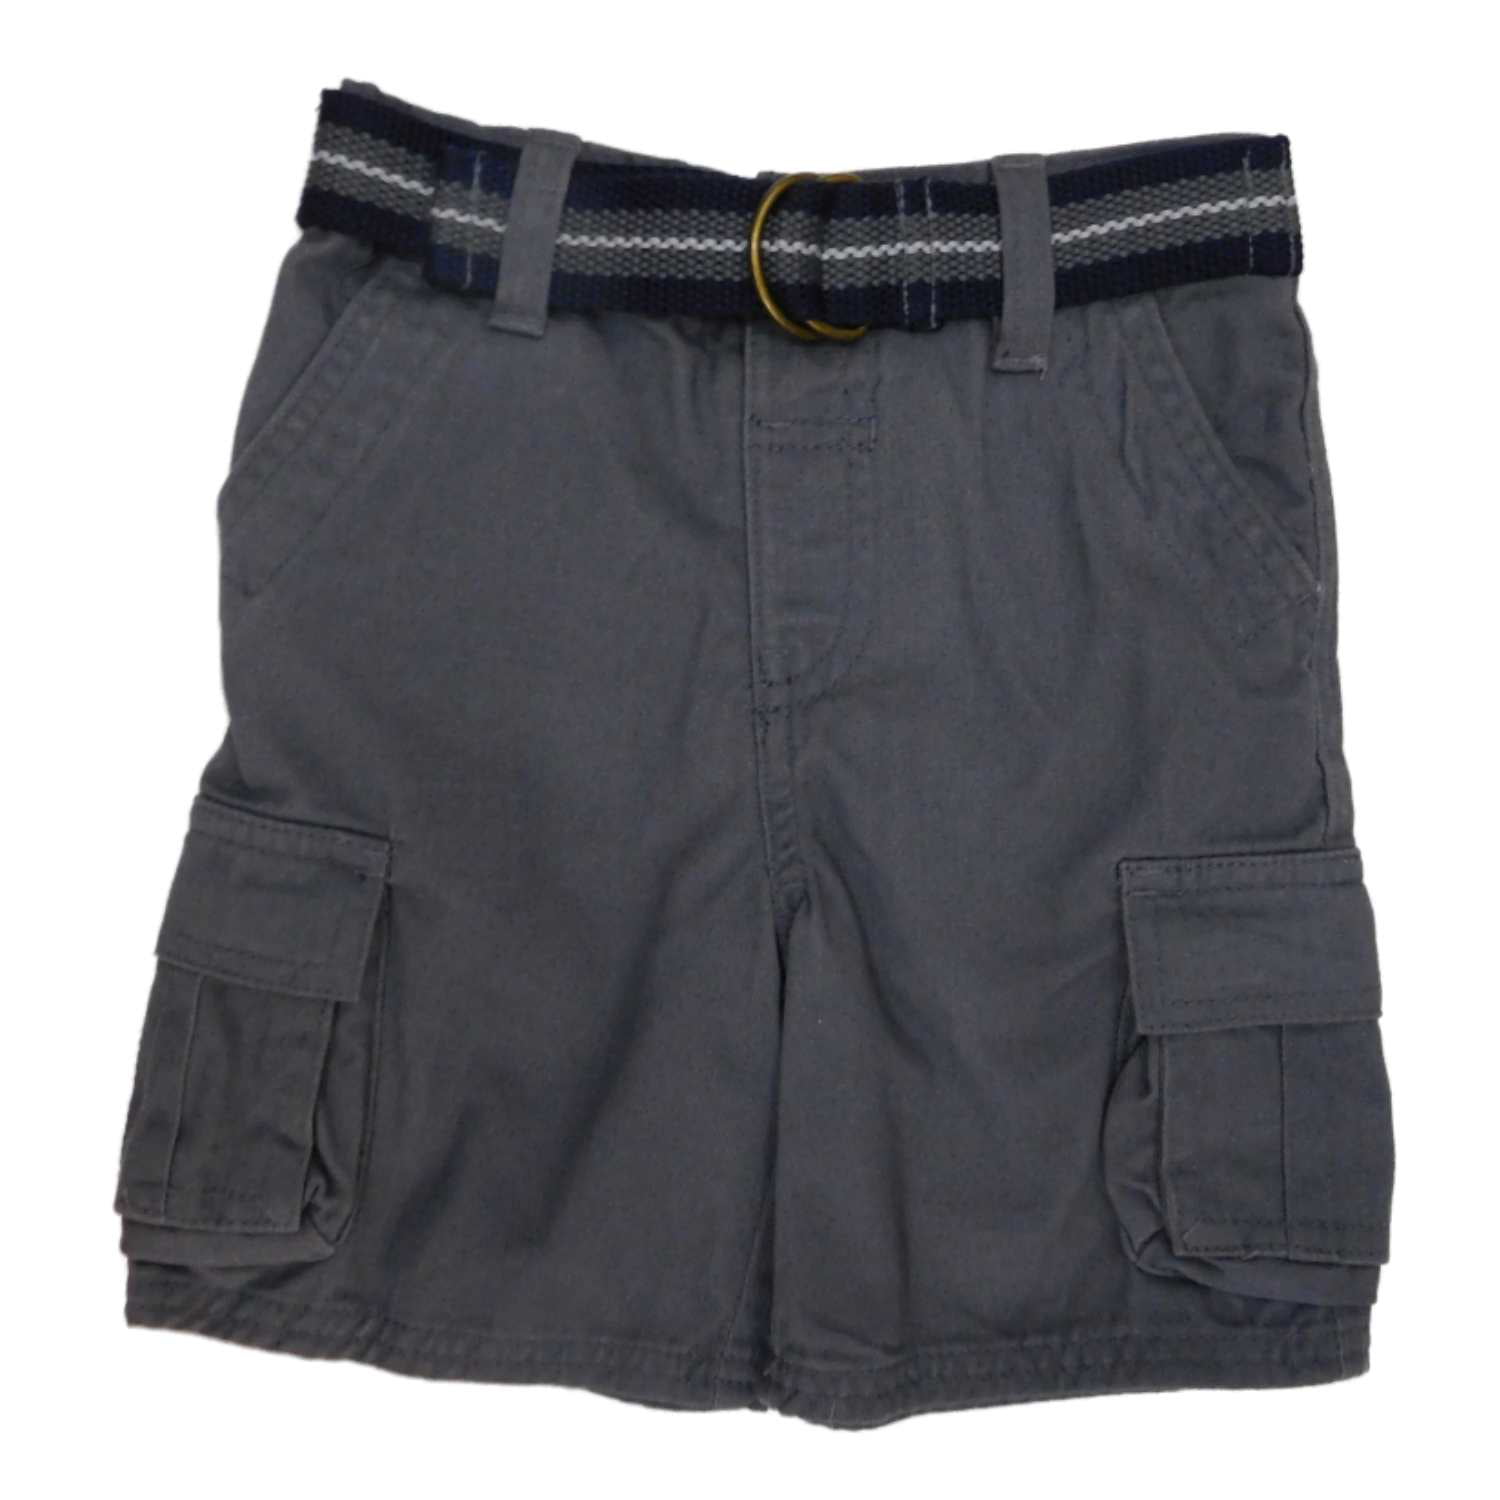 Toughskins Cargo  Infant  Toddler Boys Shorts  Size12 M or 3T NWT Gray or Khaki 